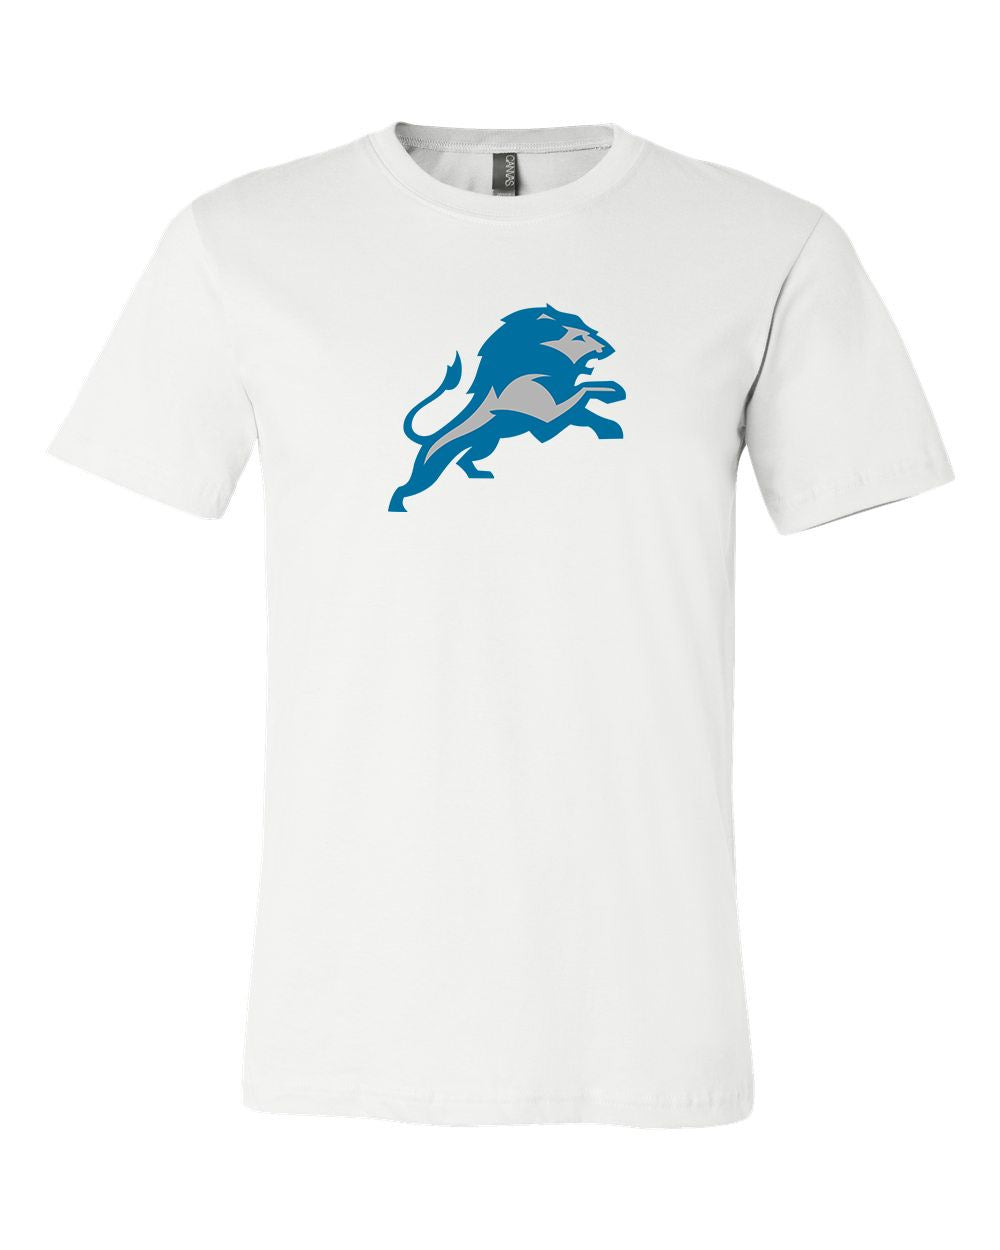 Detroit Lions Alternate Future Logo Team shirt 6 sizes S-3XL